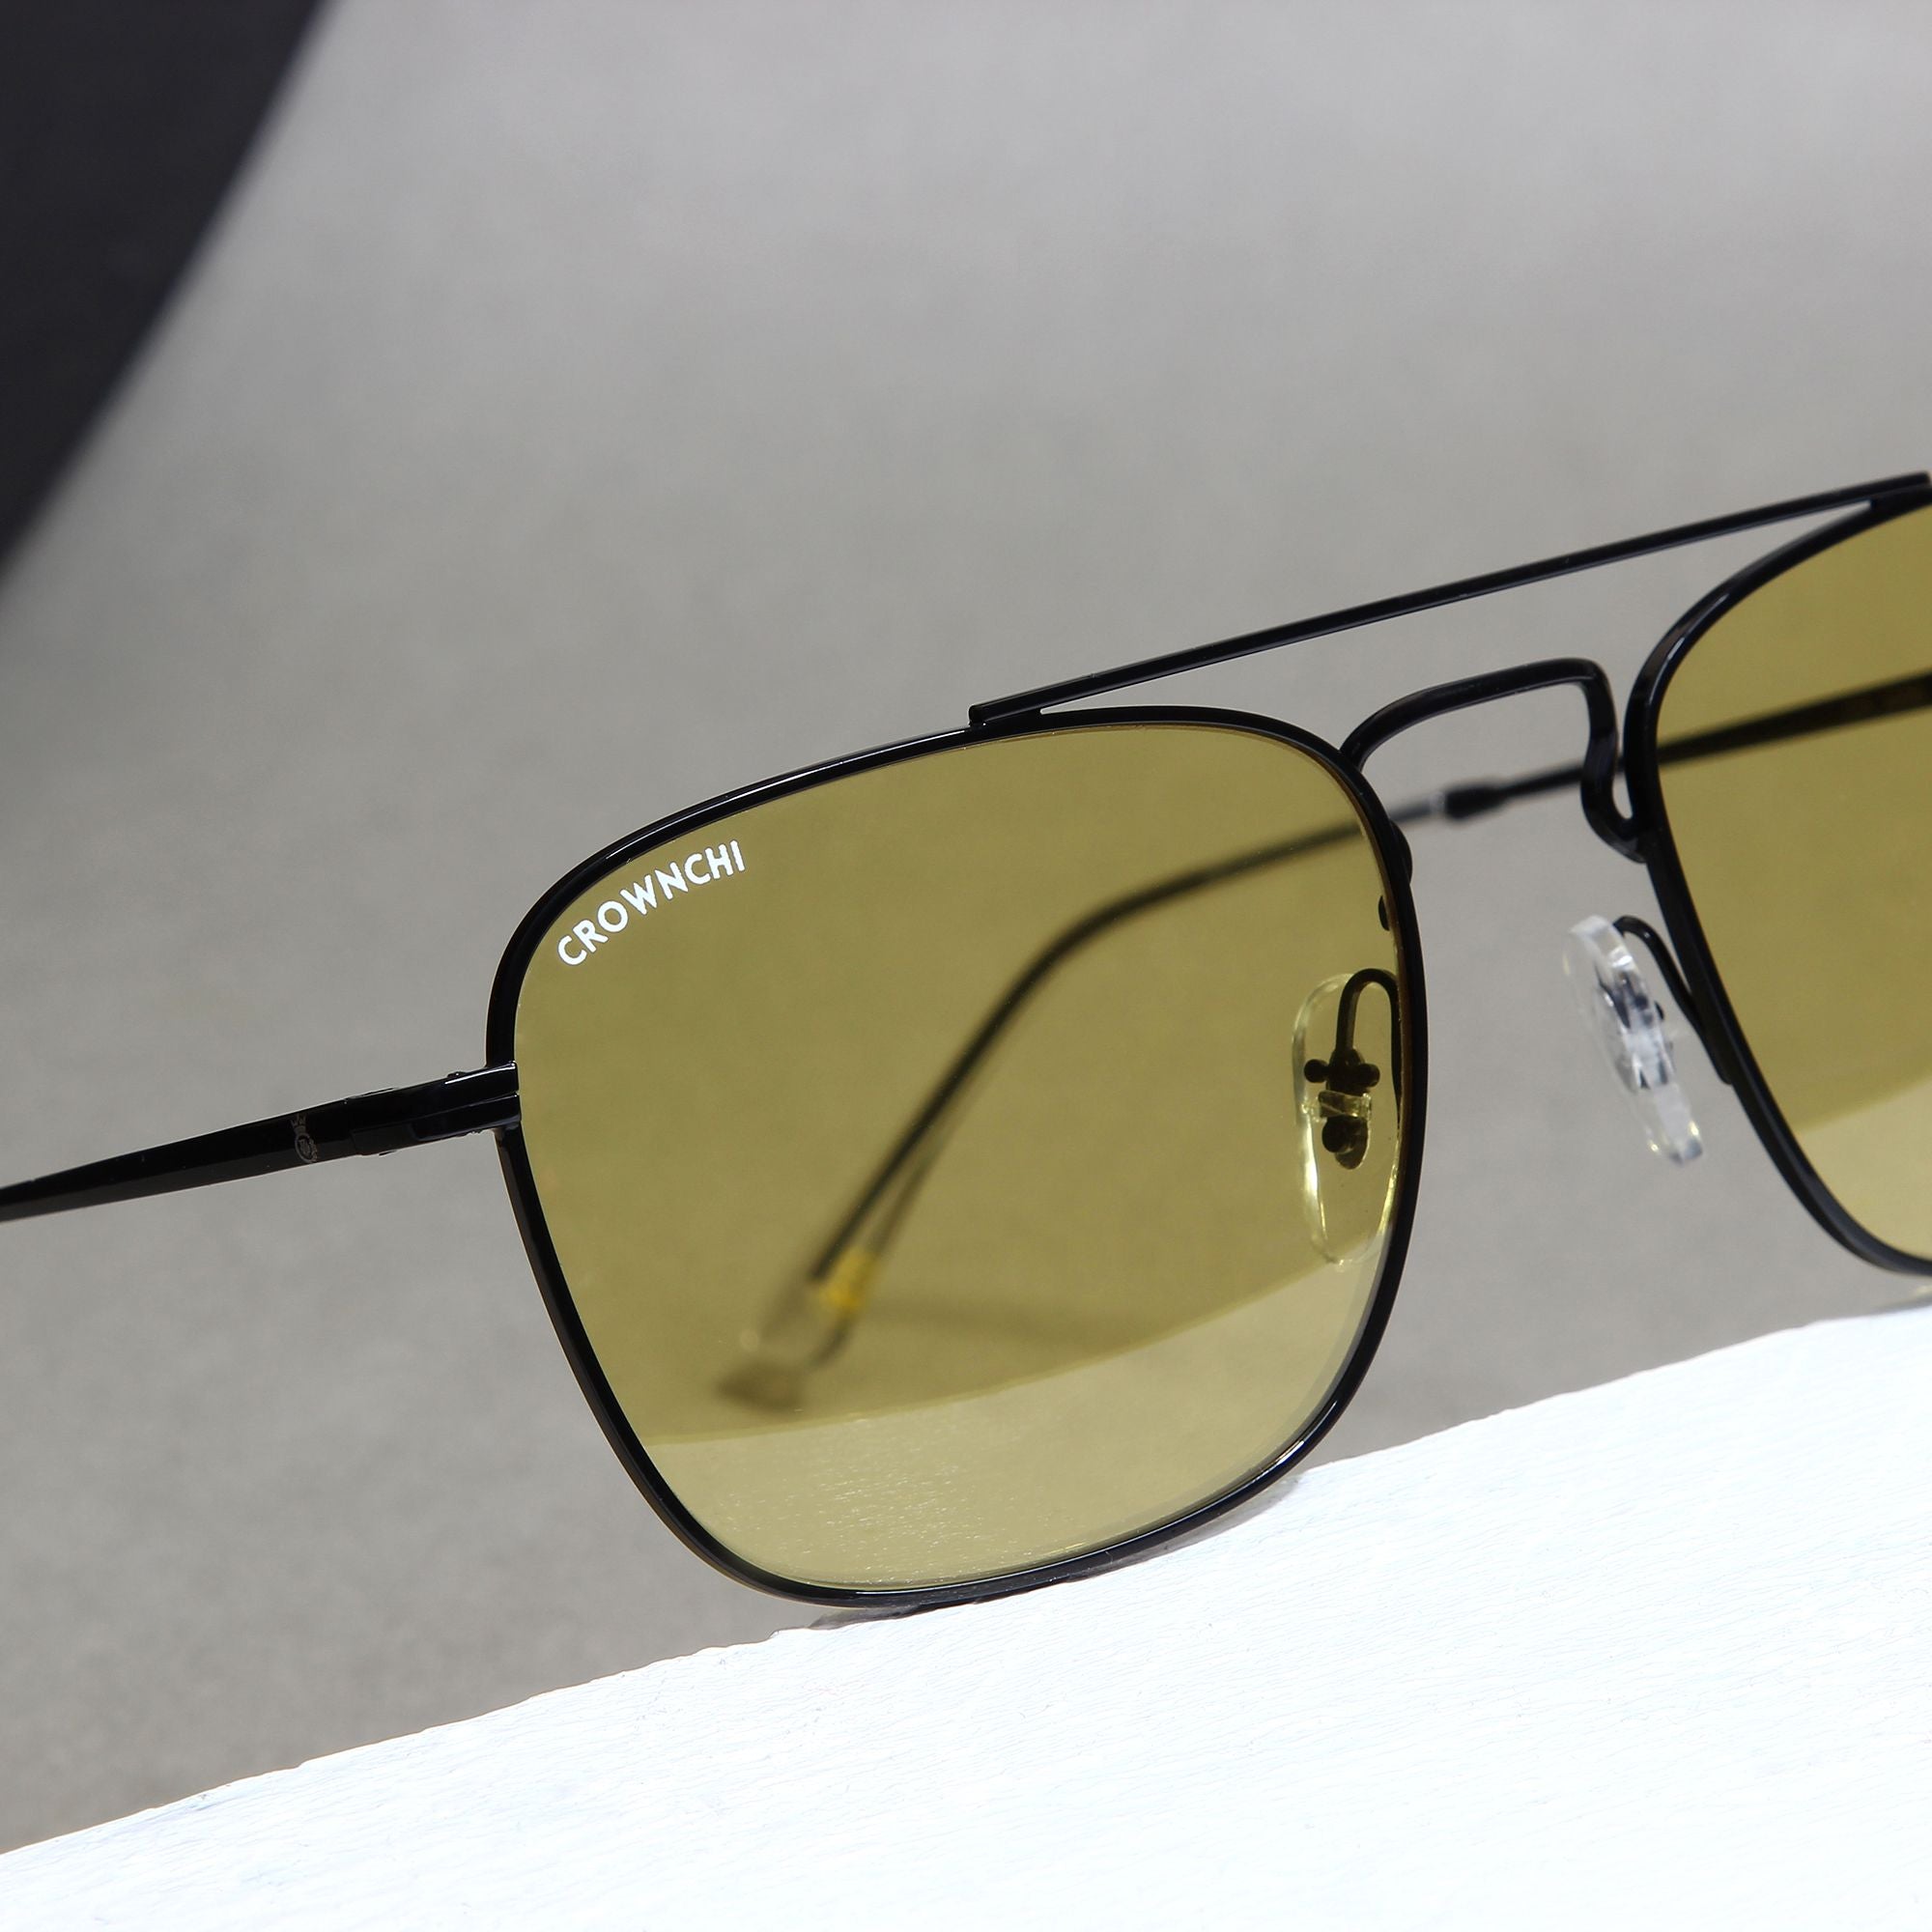 Denver Black Yellow Square Edition Sunglasses